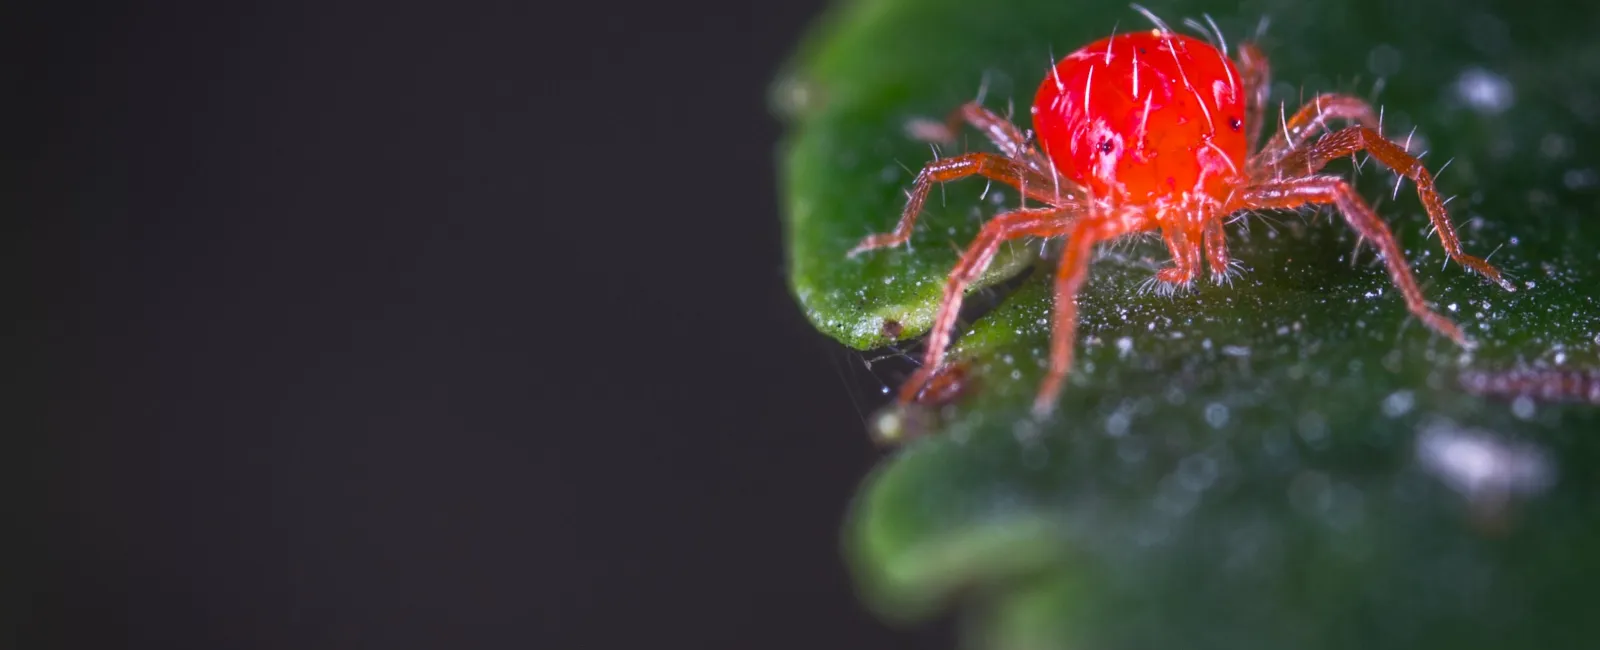 How to Identify Spider Mites